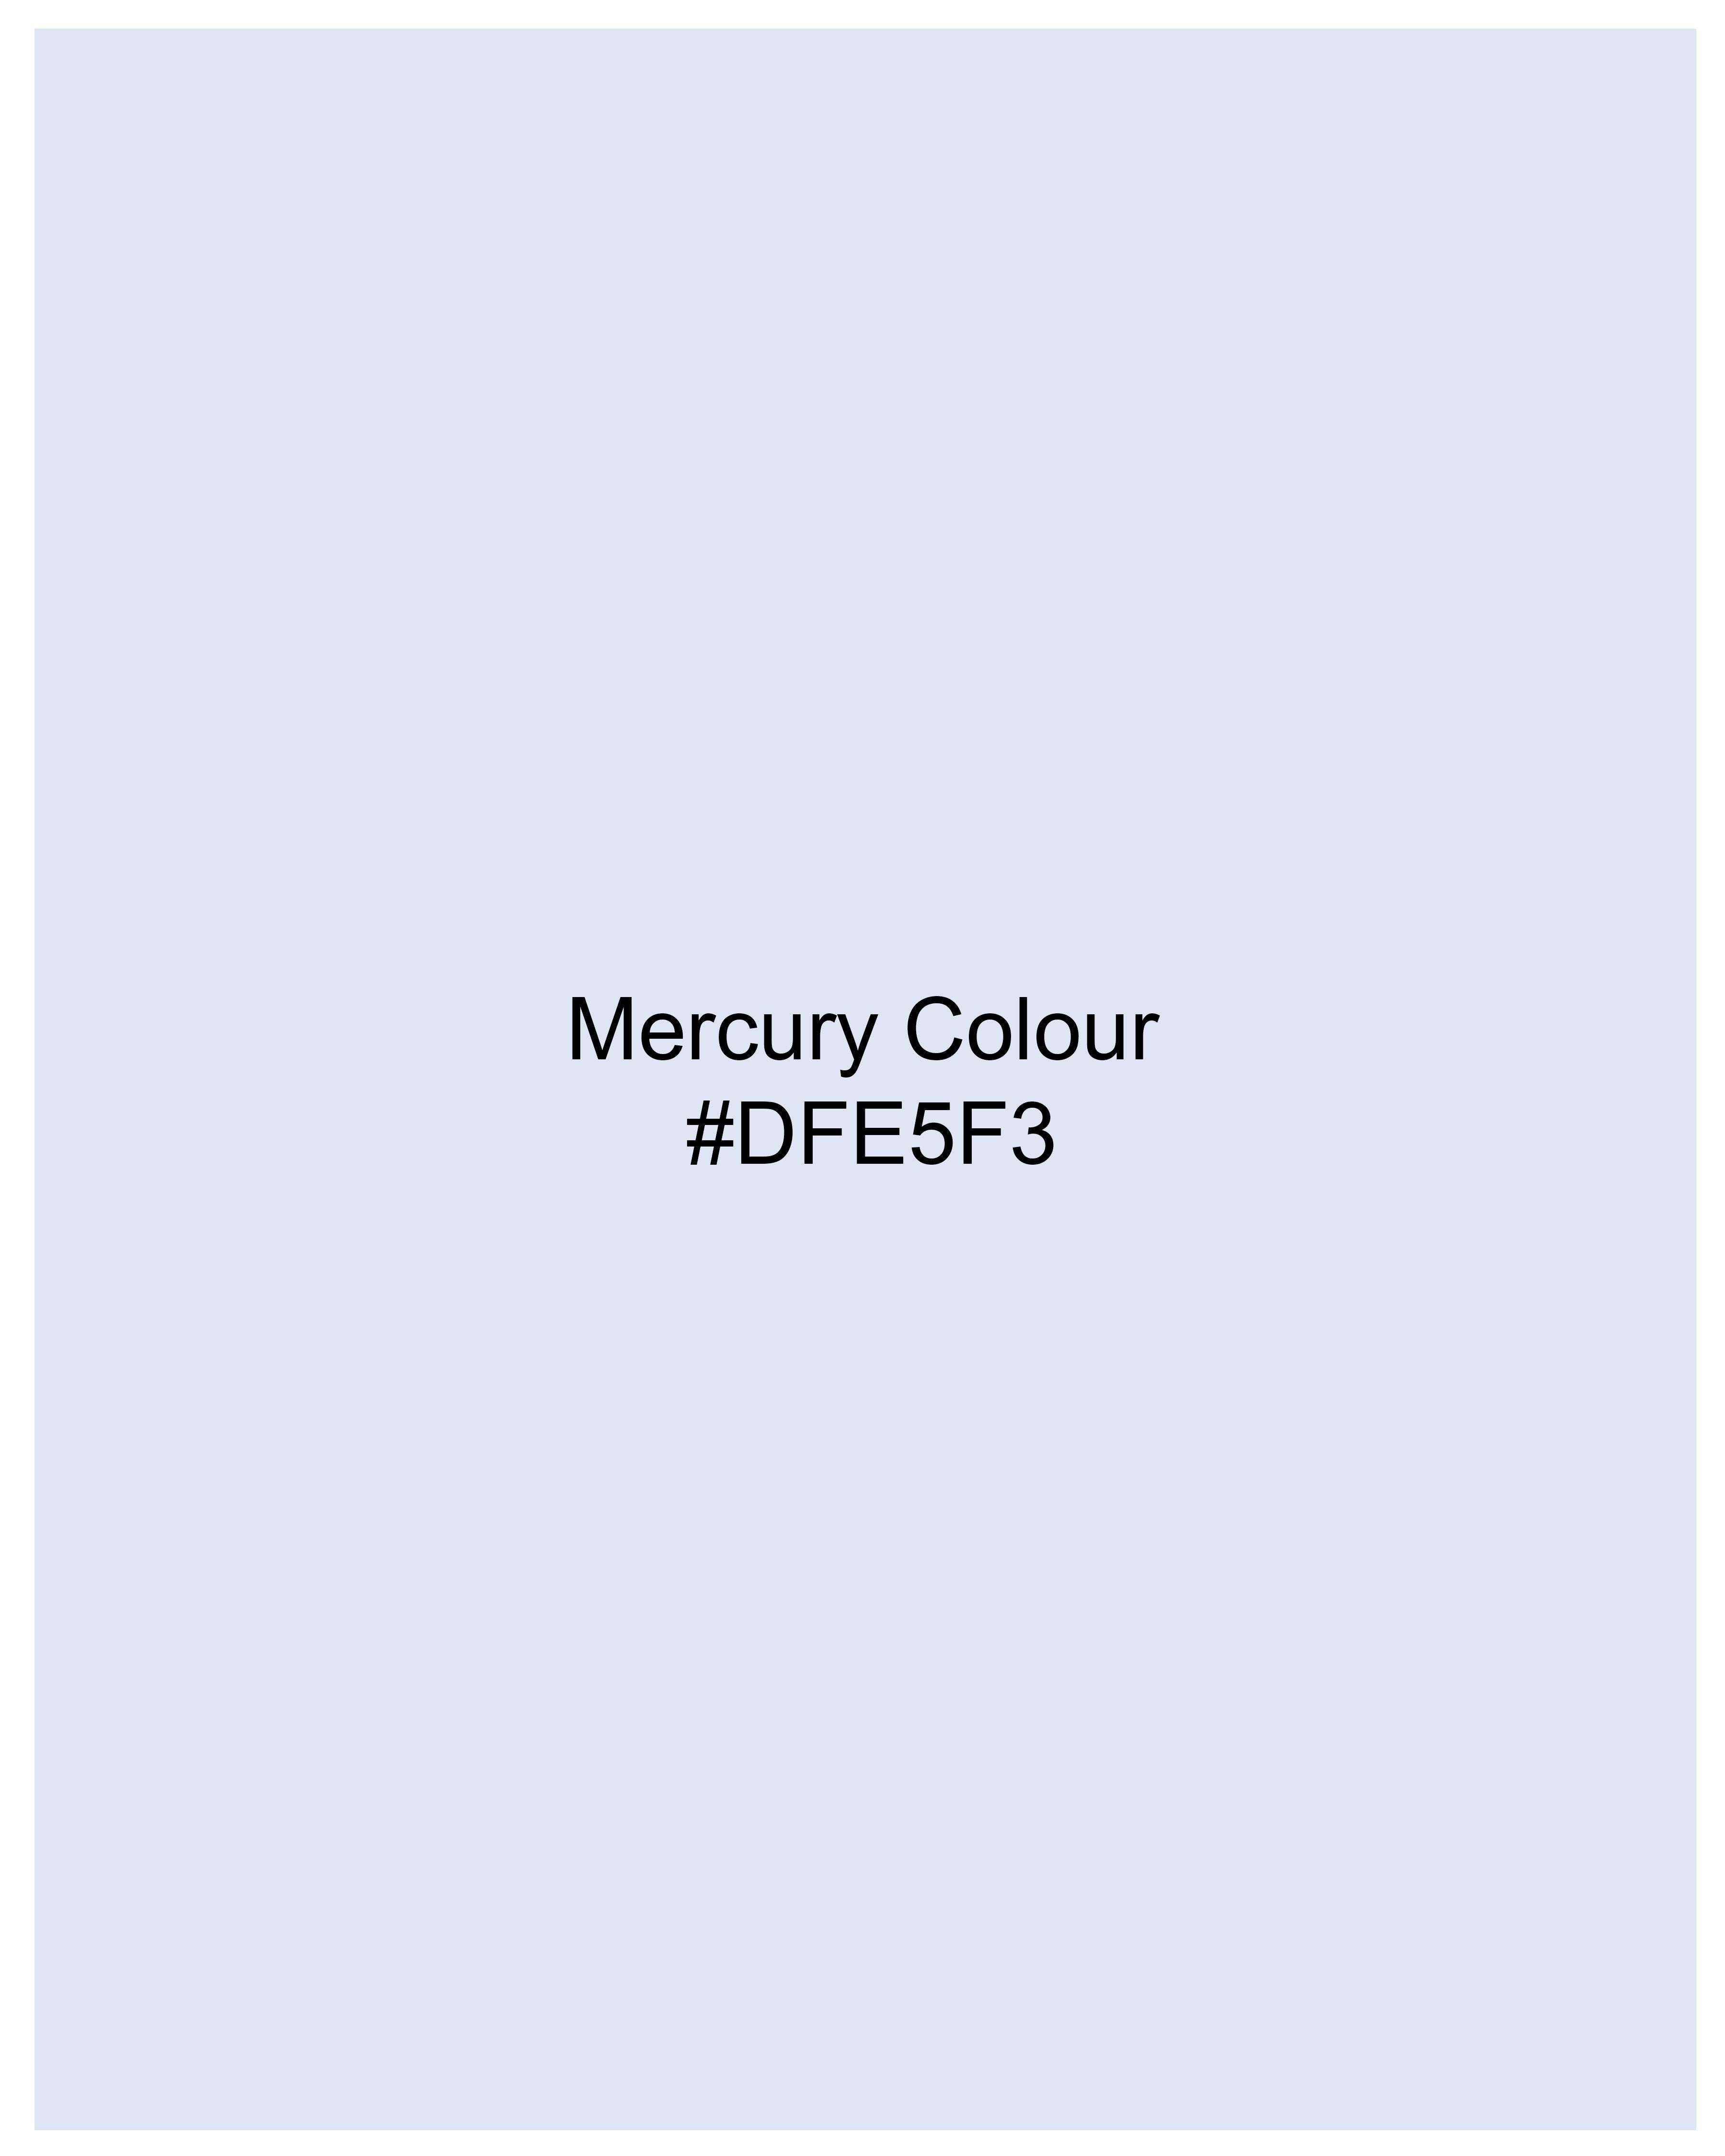 Mercury Sky Blue Royal Oxford Shirt 9781-38, 9781-H-38, 9781-39, 9781-H-39, 9781-40, 9781-H-40, 9781-42, 9781-H-42, 9781-44, 9781-H-44, 9781-46, 9781-H-46, 9781-48, 9781-H-48, 9781-50, 9781-H-50, 9781-52, 9781-H-52